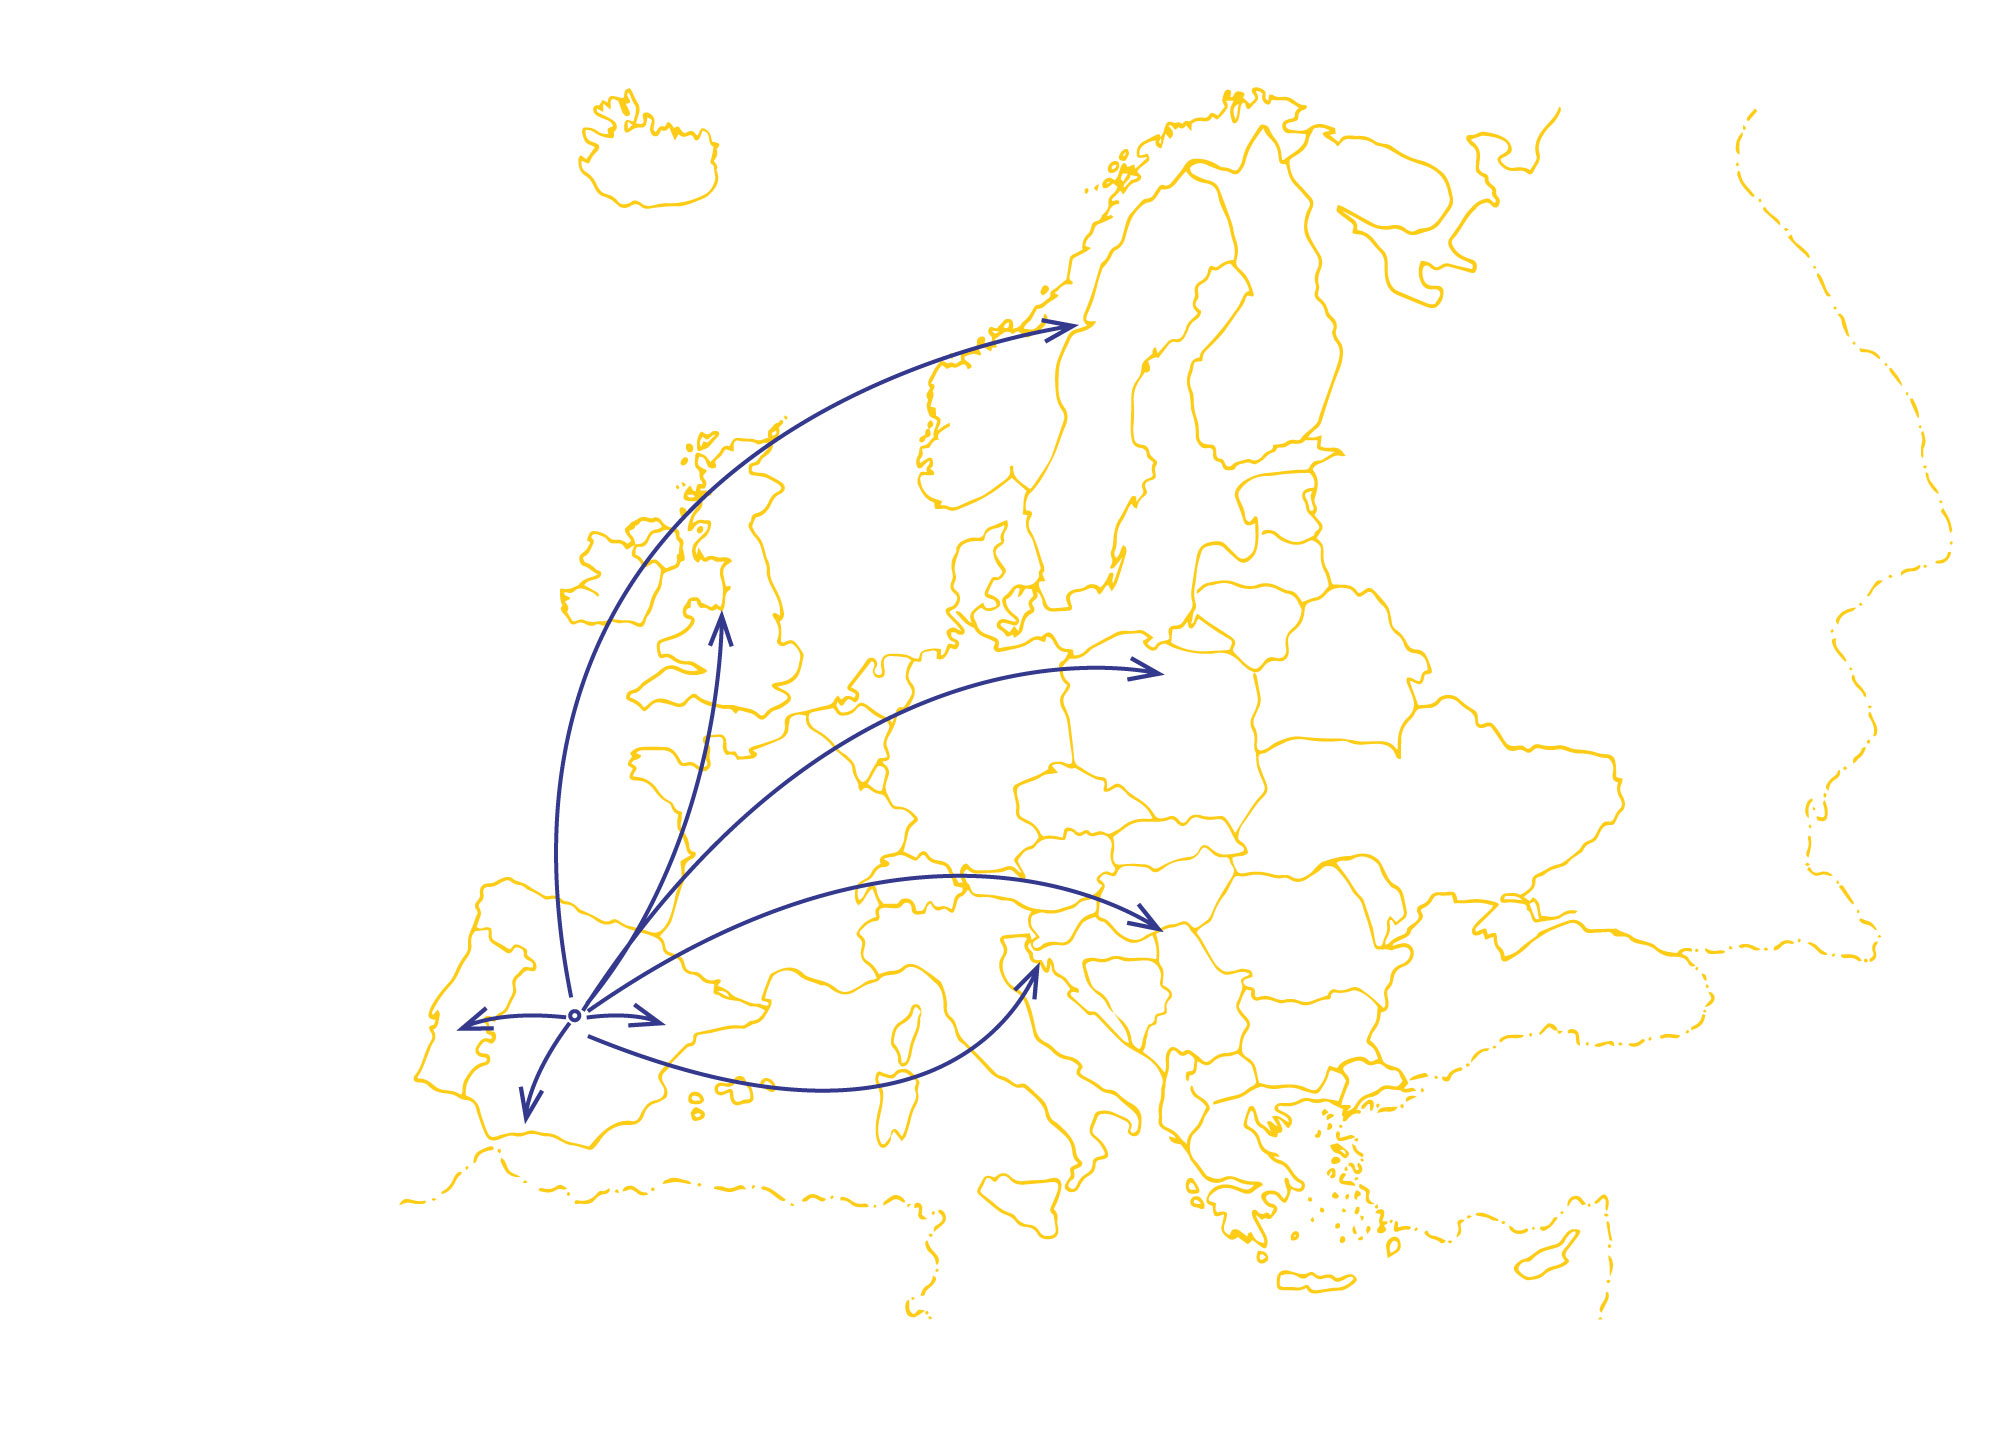 transportes torres mapa mudo politico de europa